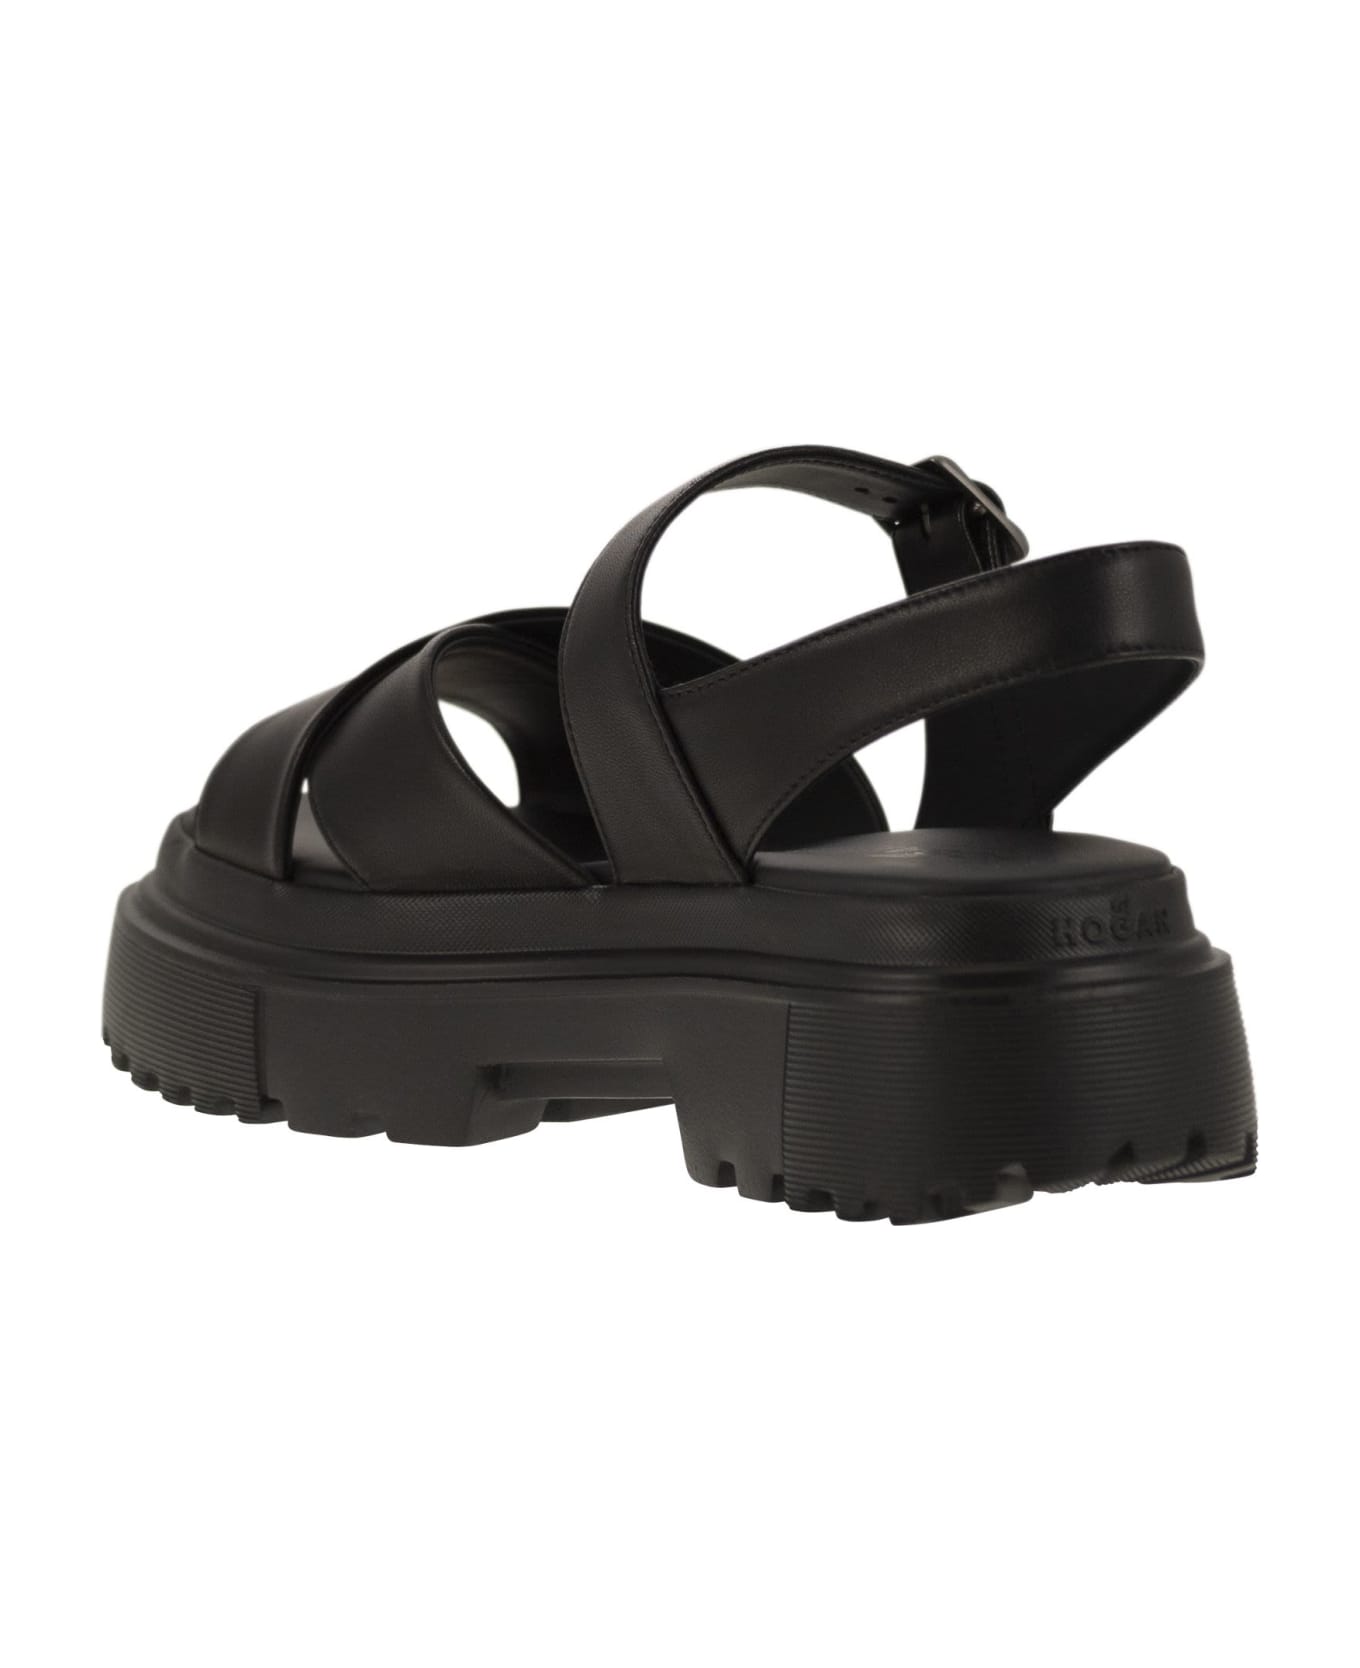 Hogan Leather Sandal With Midsole - Black